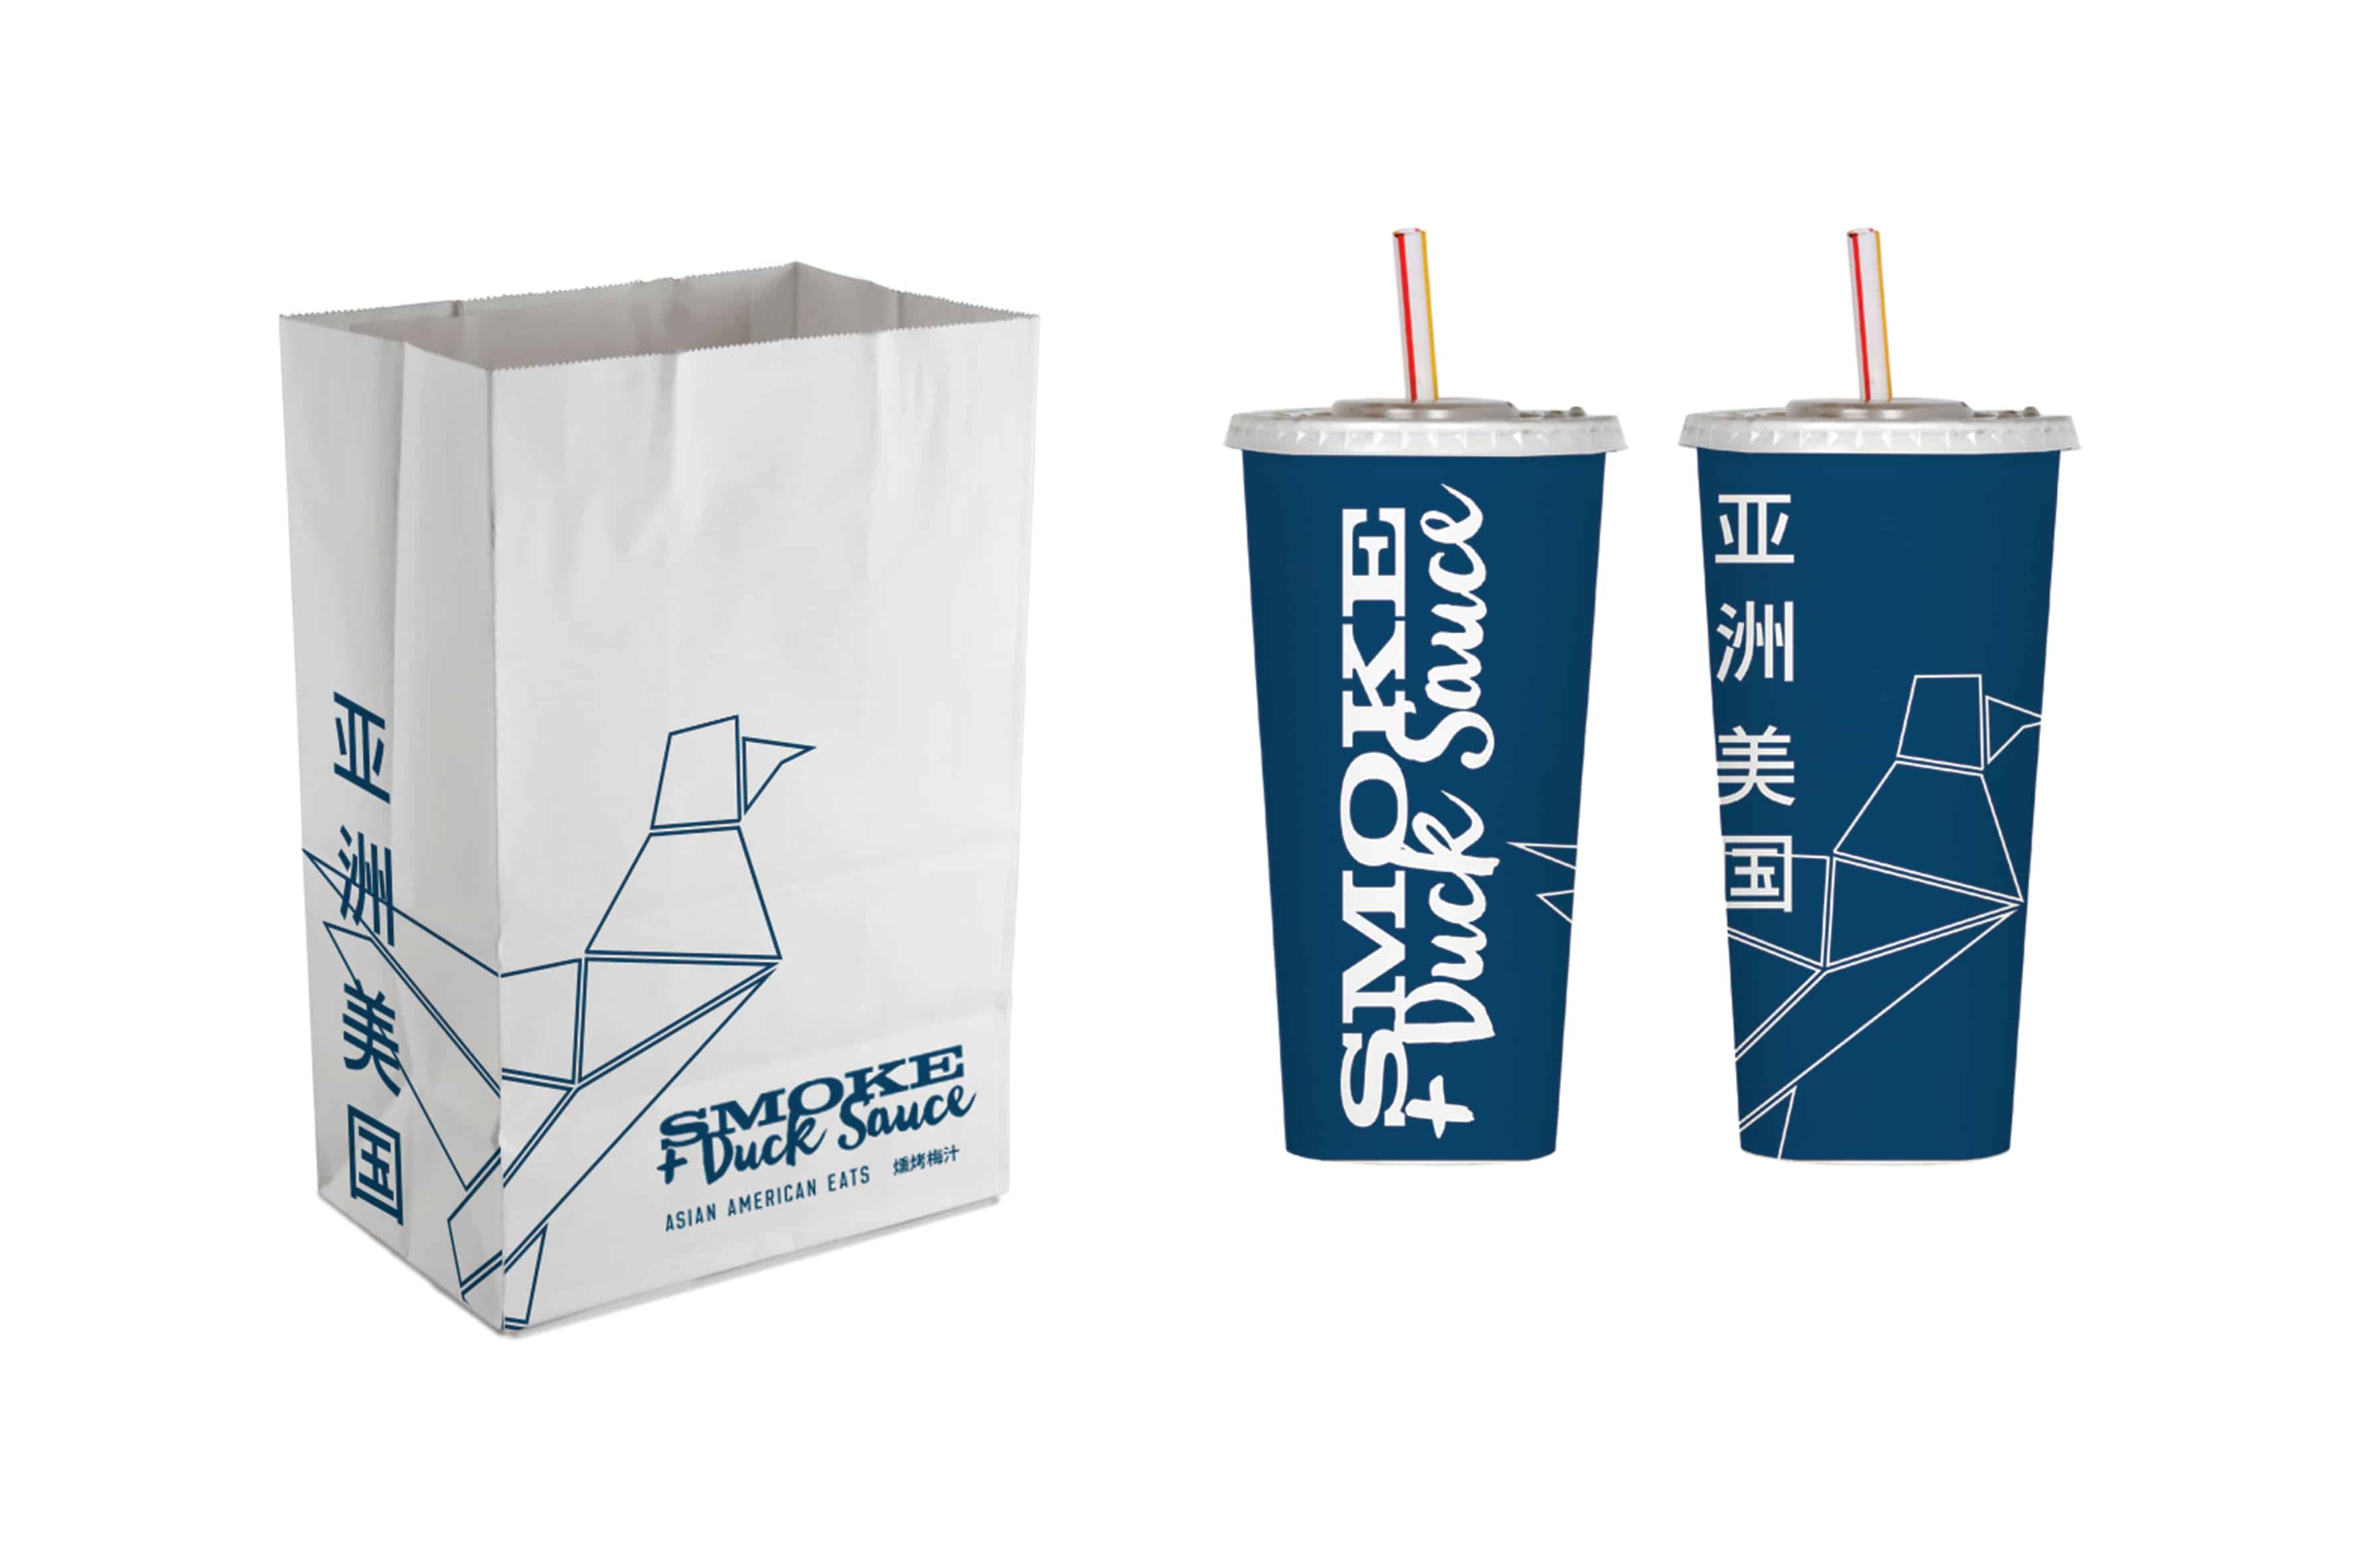 Smoke & Duck Sauce asian fusion fast casual restaurant branding and concept development design packaging design